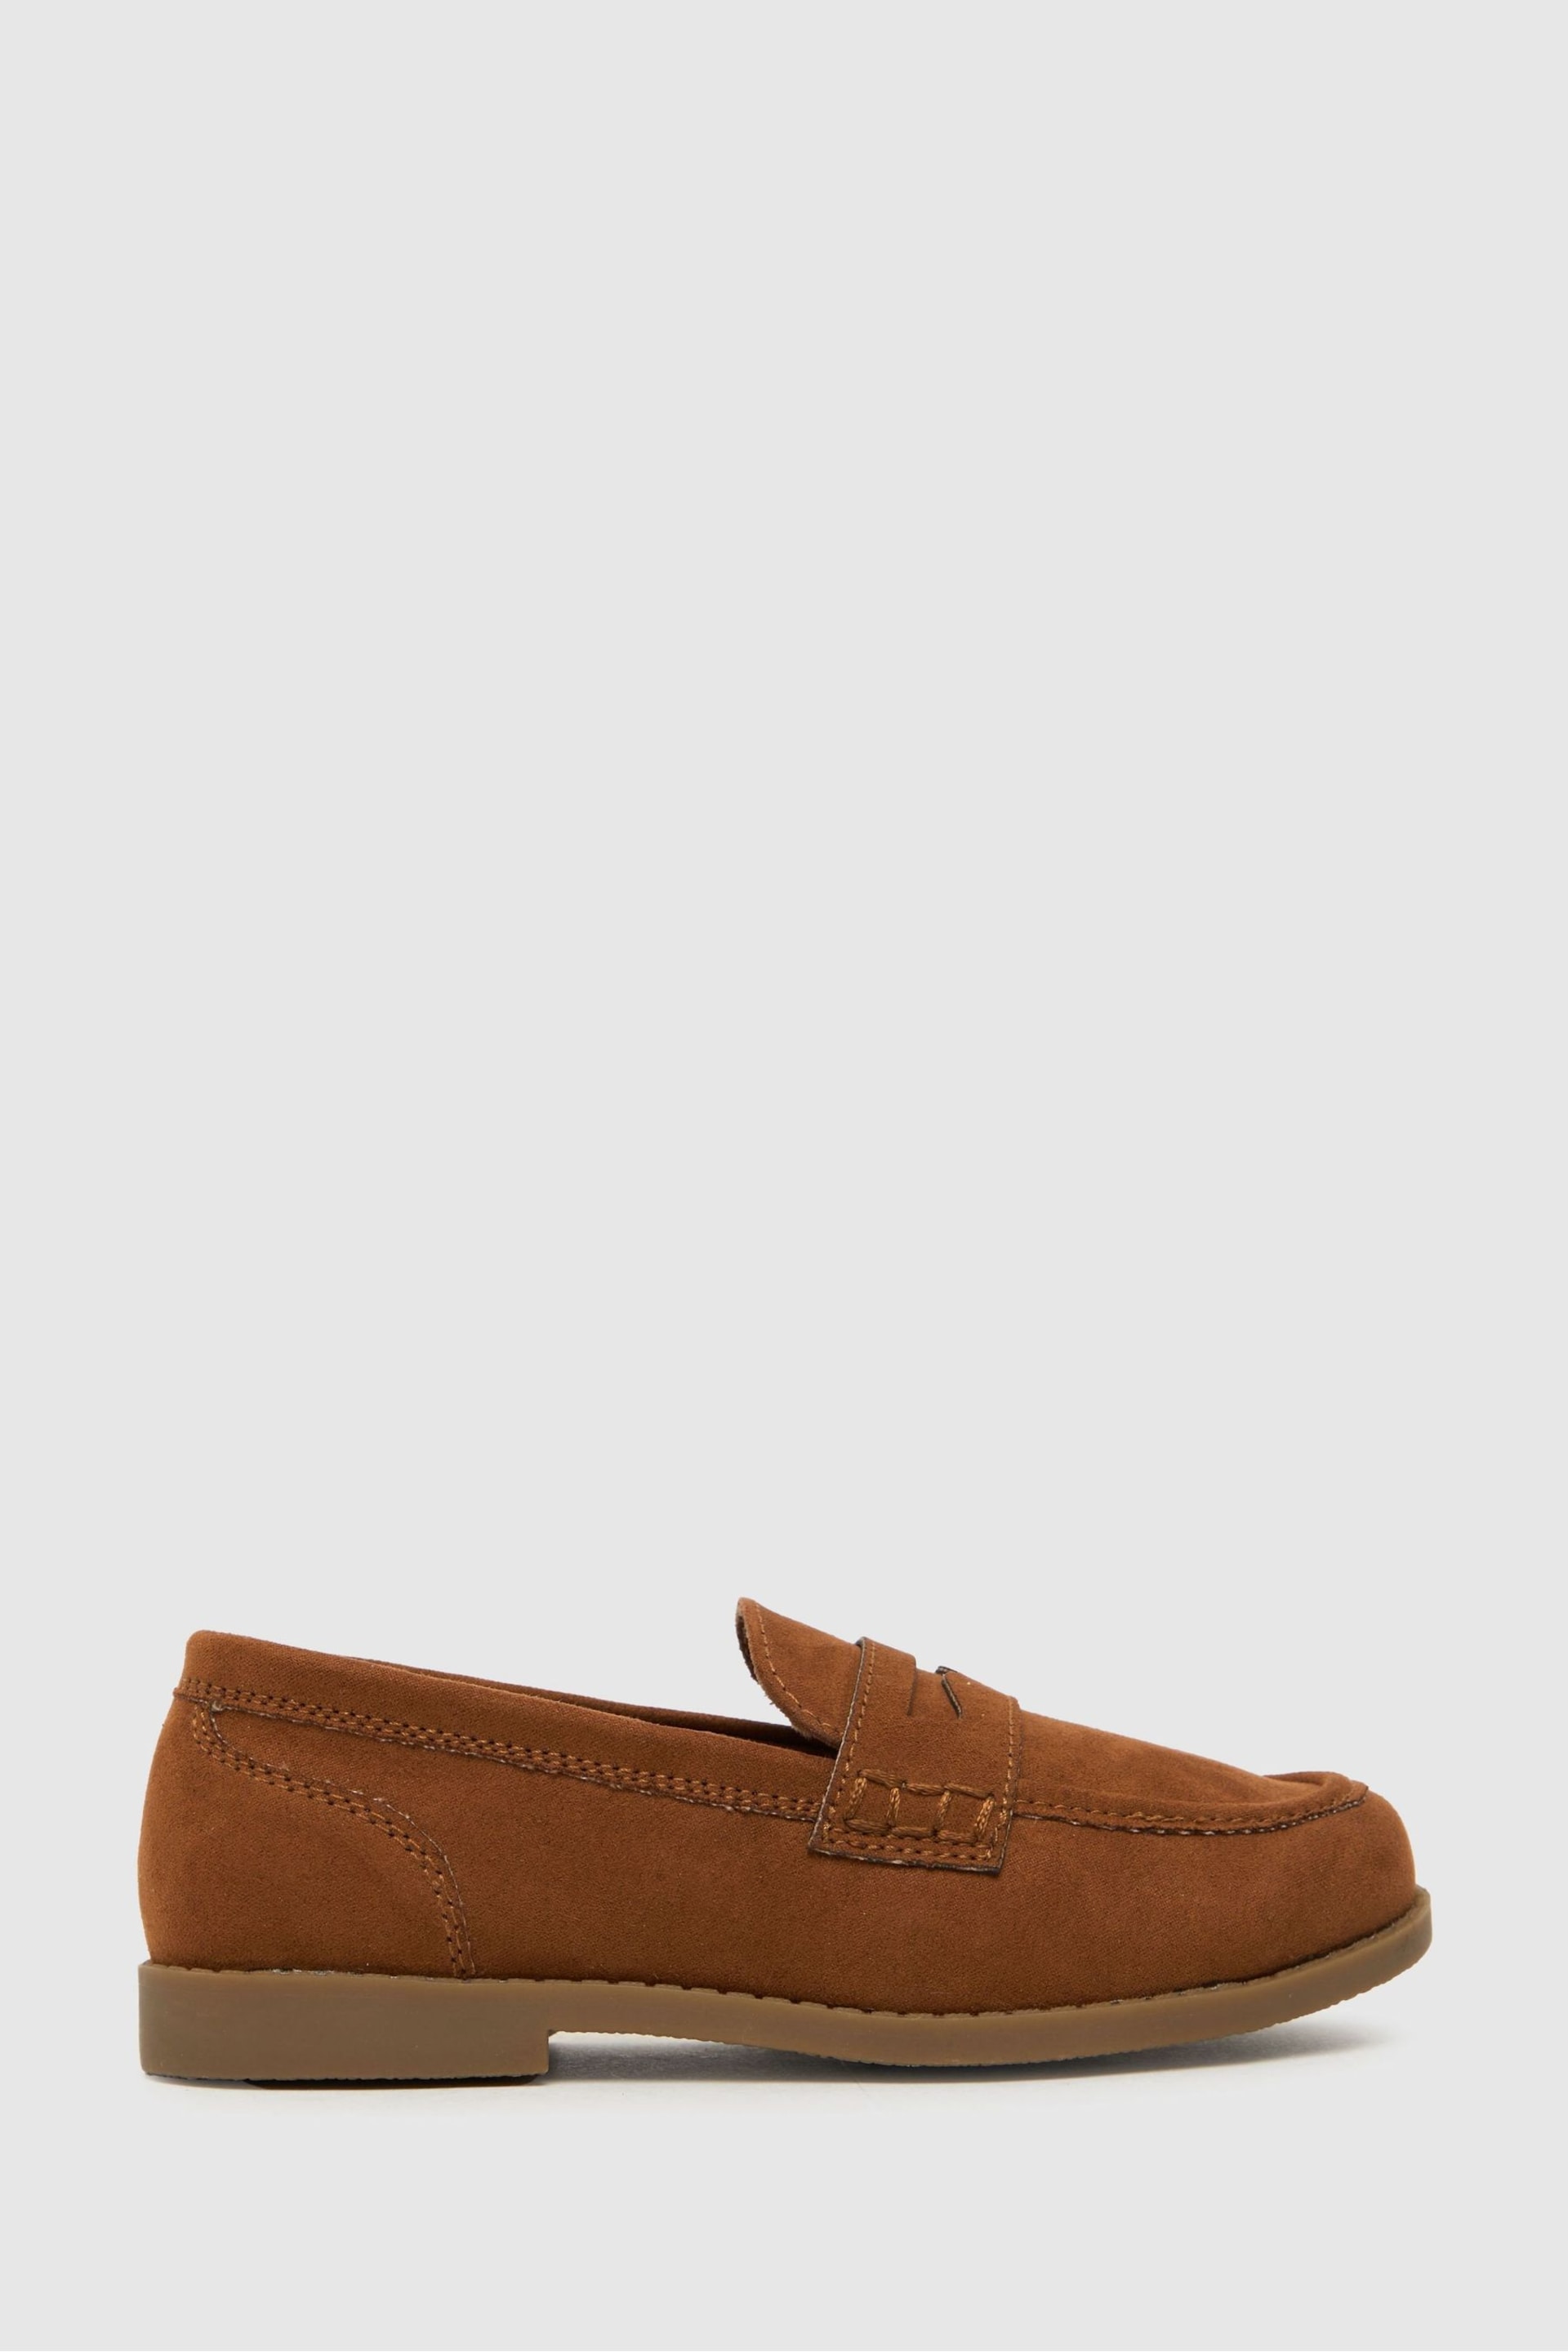 Schuh Junior Lightning Brown Loafers - Image 1 of 2